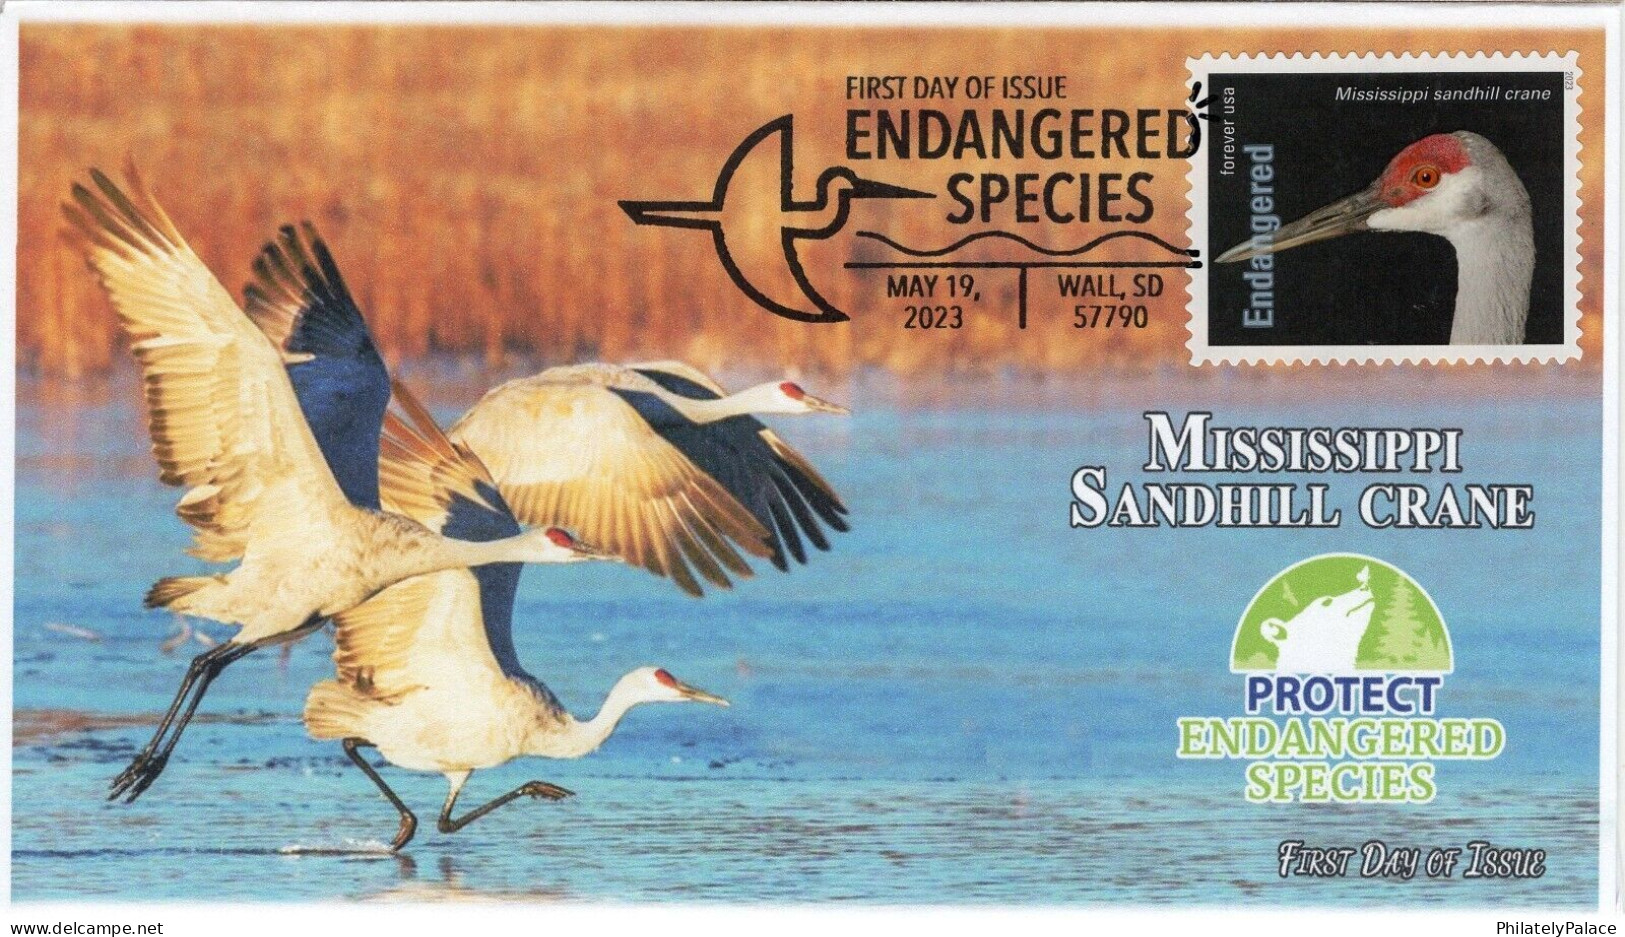 USA 2023 Mississippi Sandhill Crane, River, Endangered Species, Bird,Pictorial Postmark, FDC Cover (**) - Storia Postale